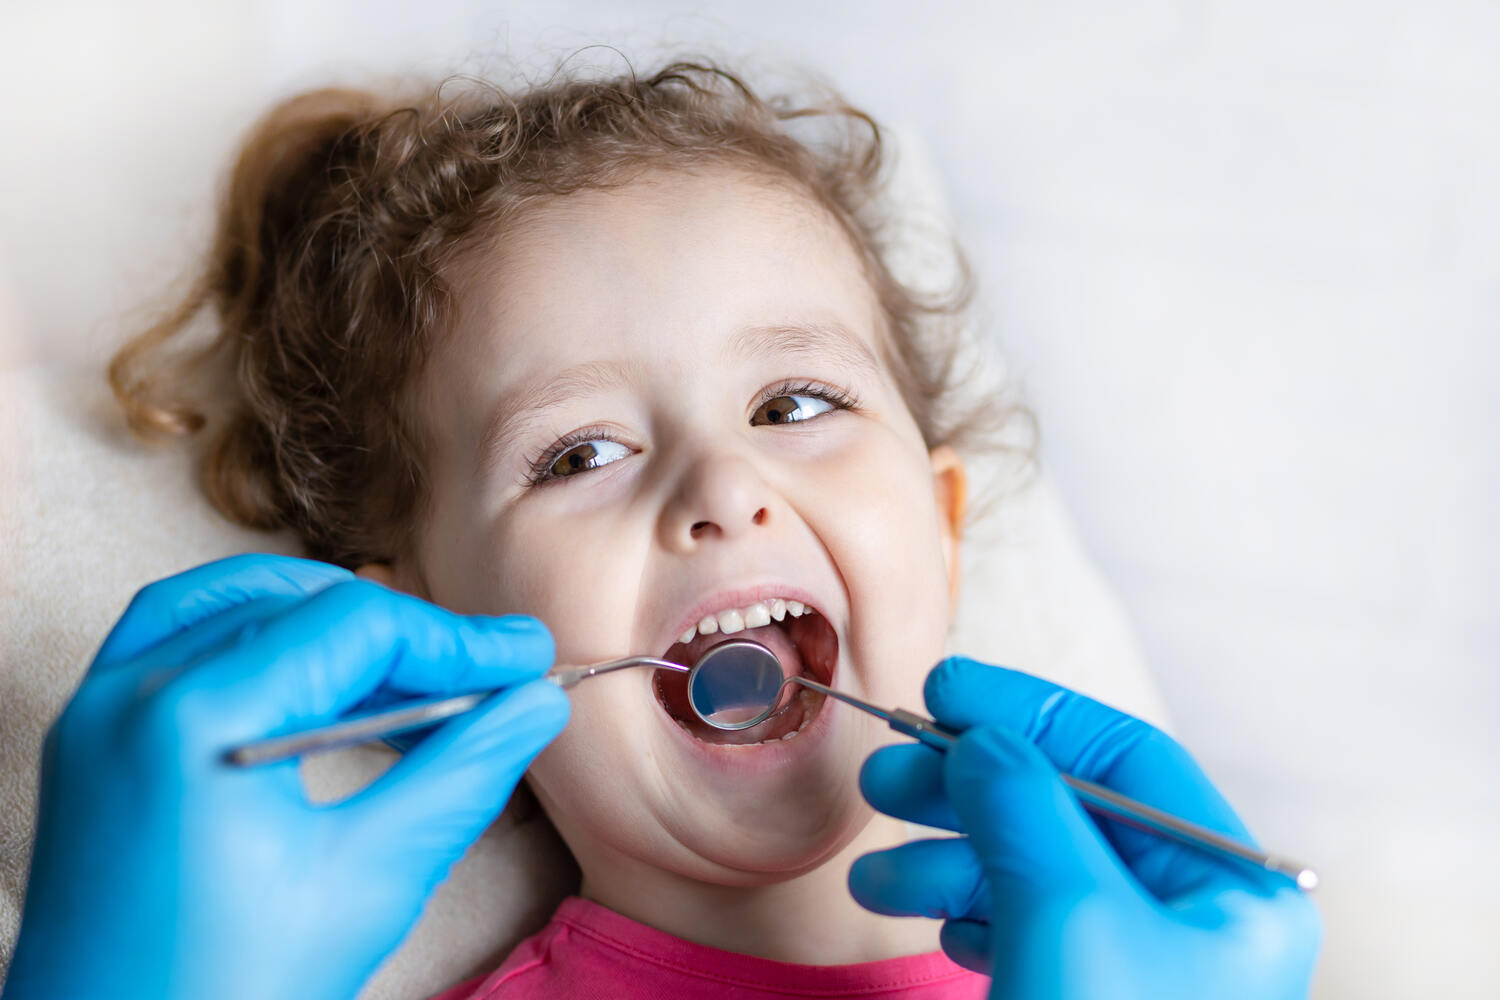 A little girl getting a dental examination